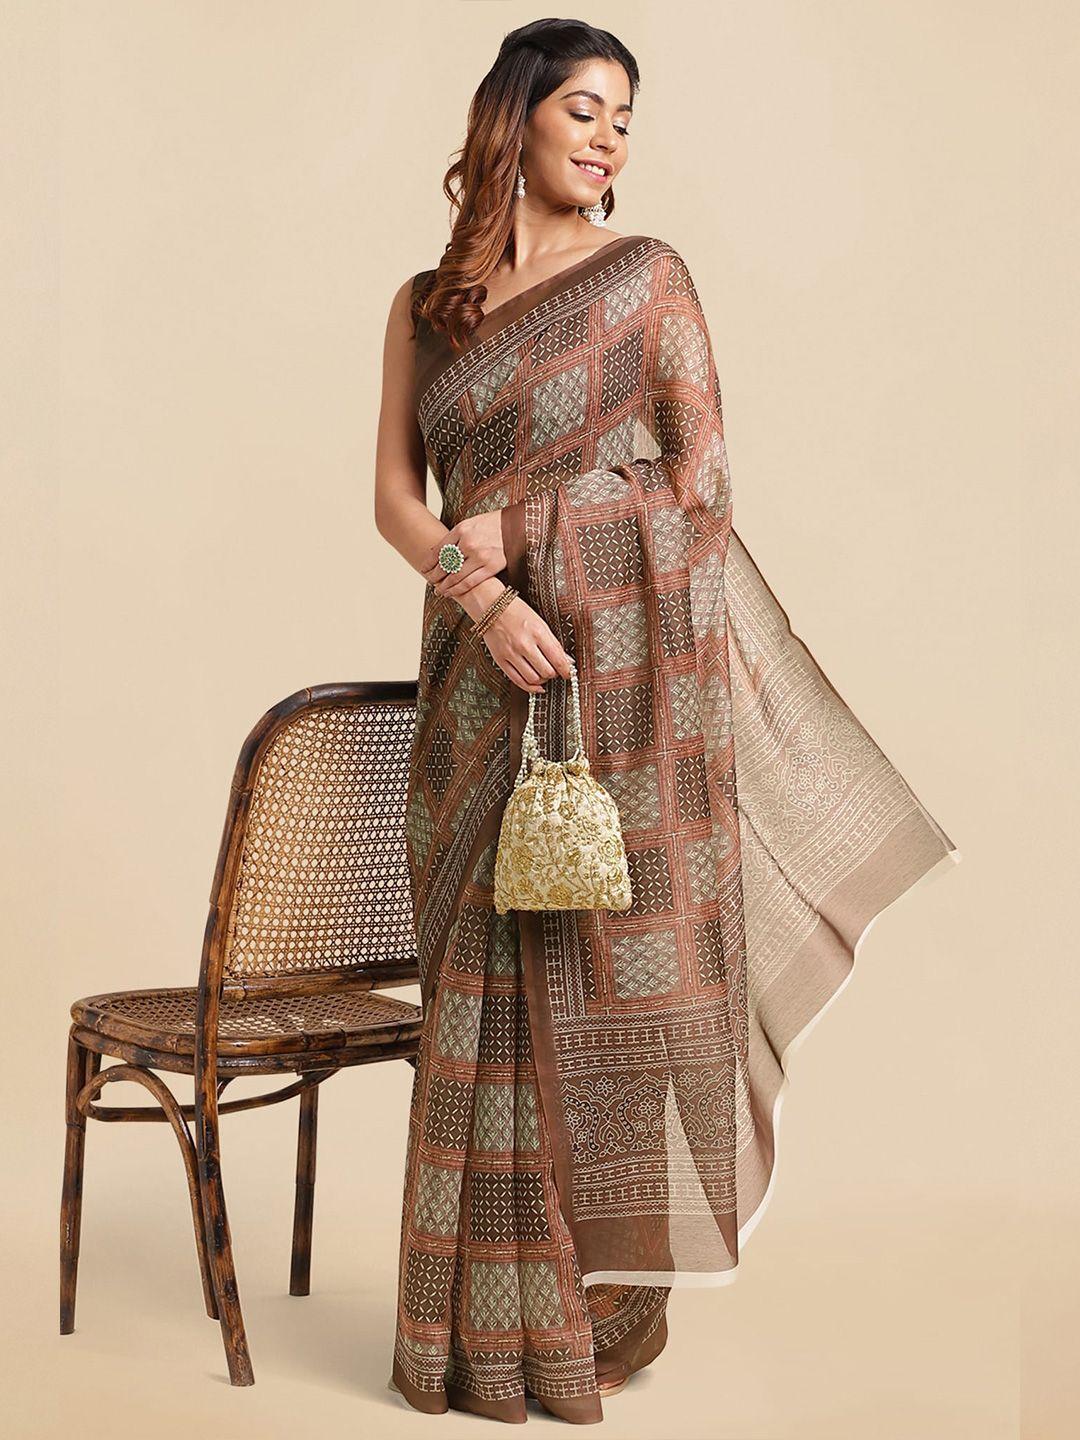 mirchi fashion brown & white ethnic motifs printed block print saree